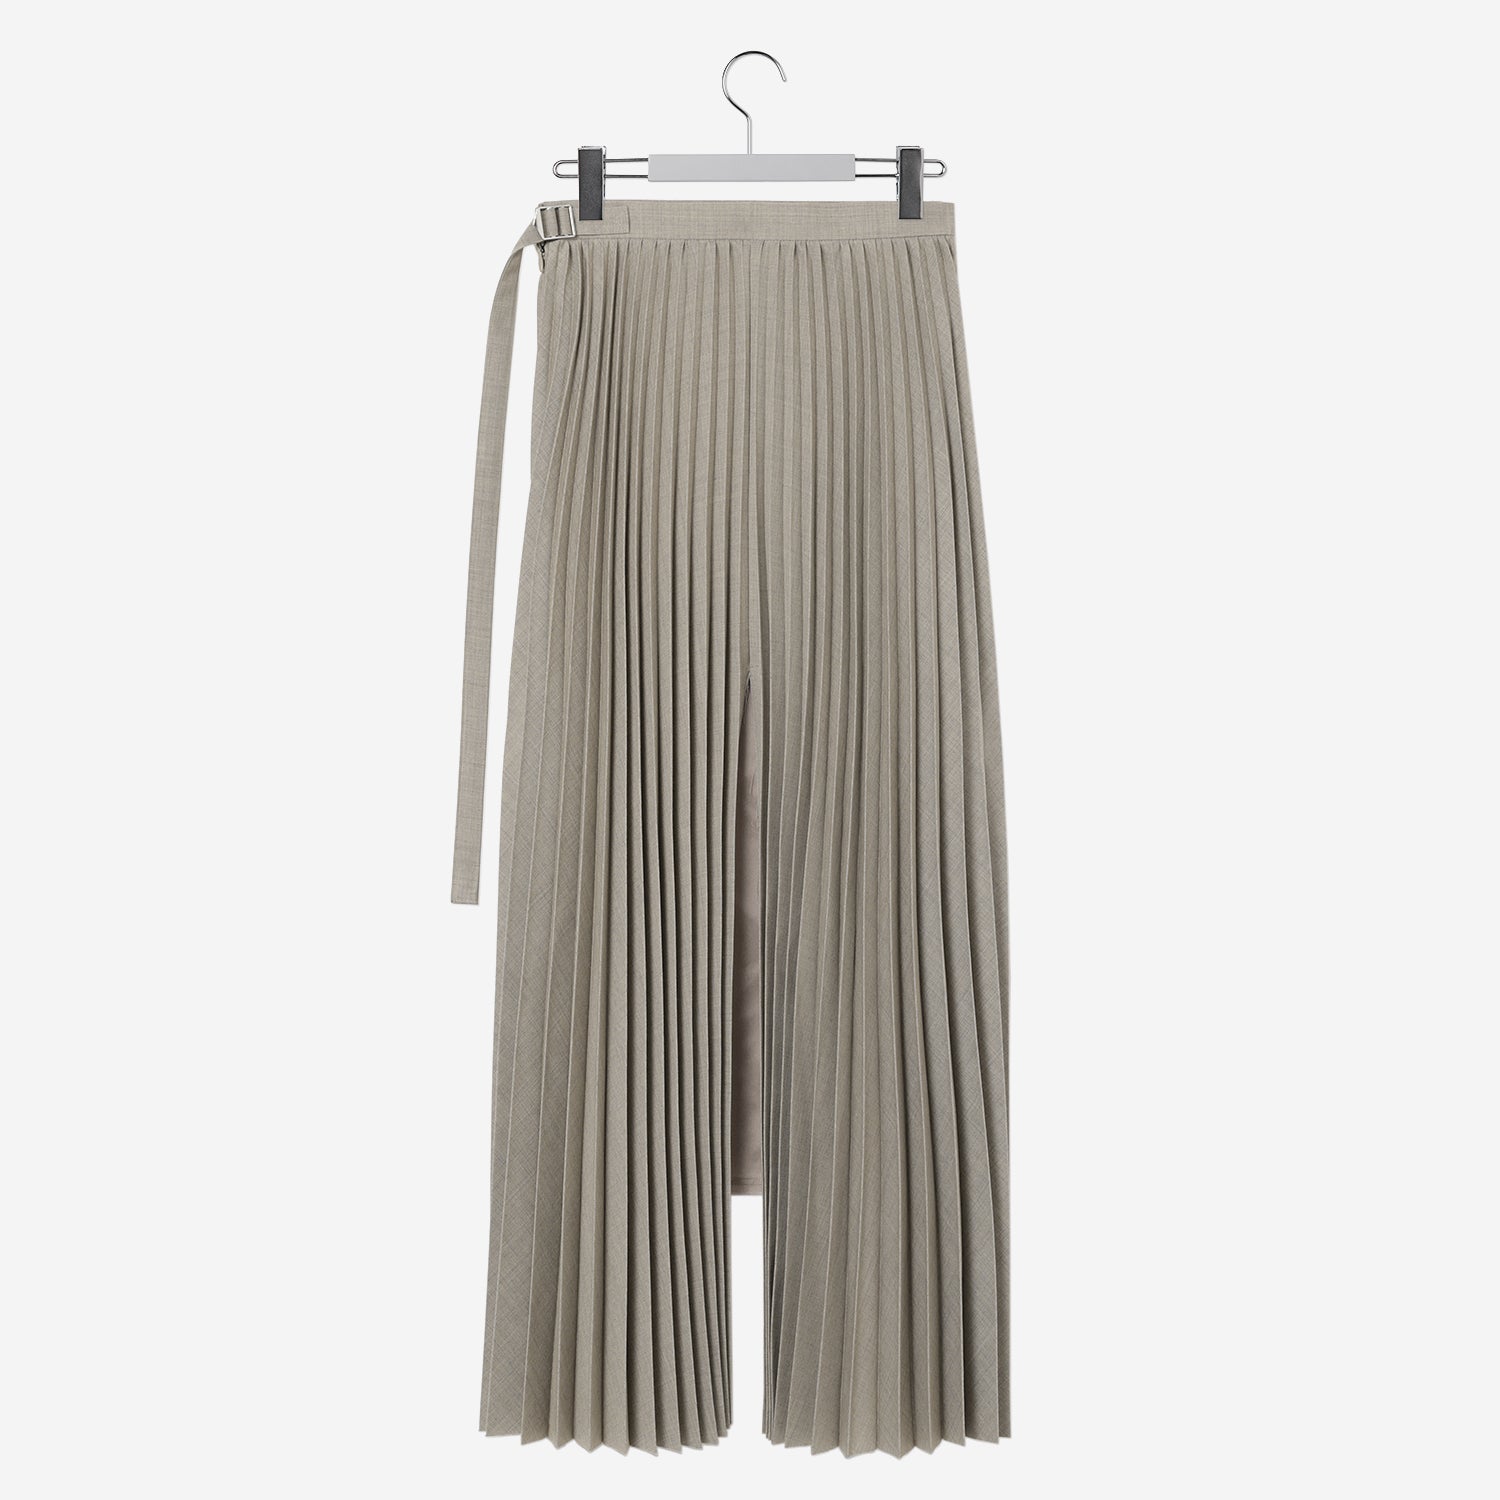 Cutout Pleats Skirt / beige